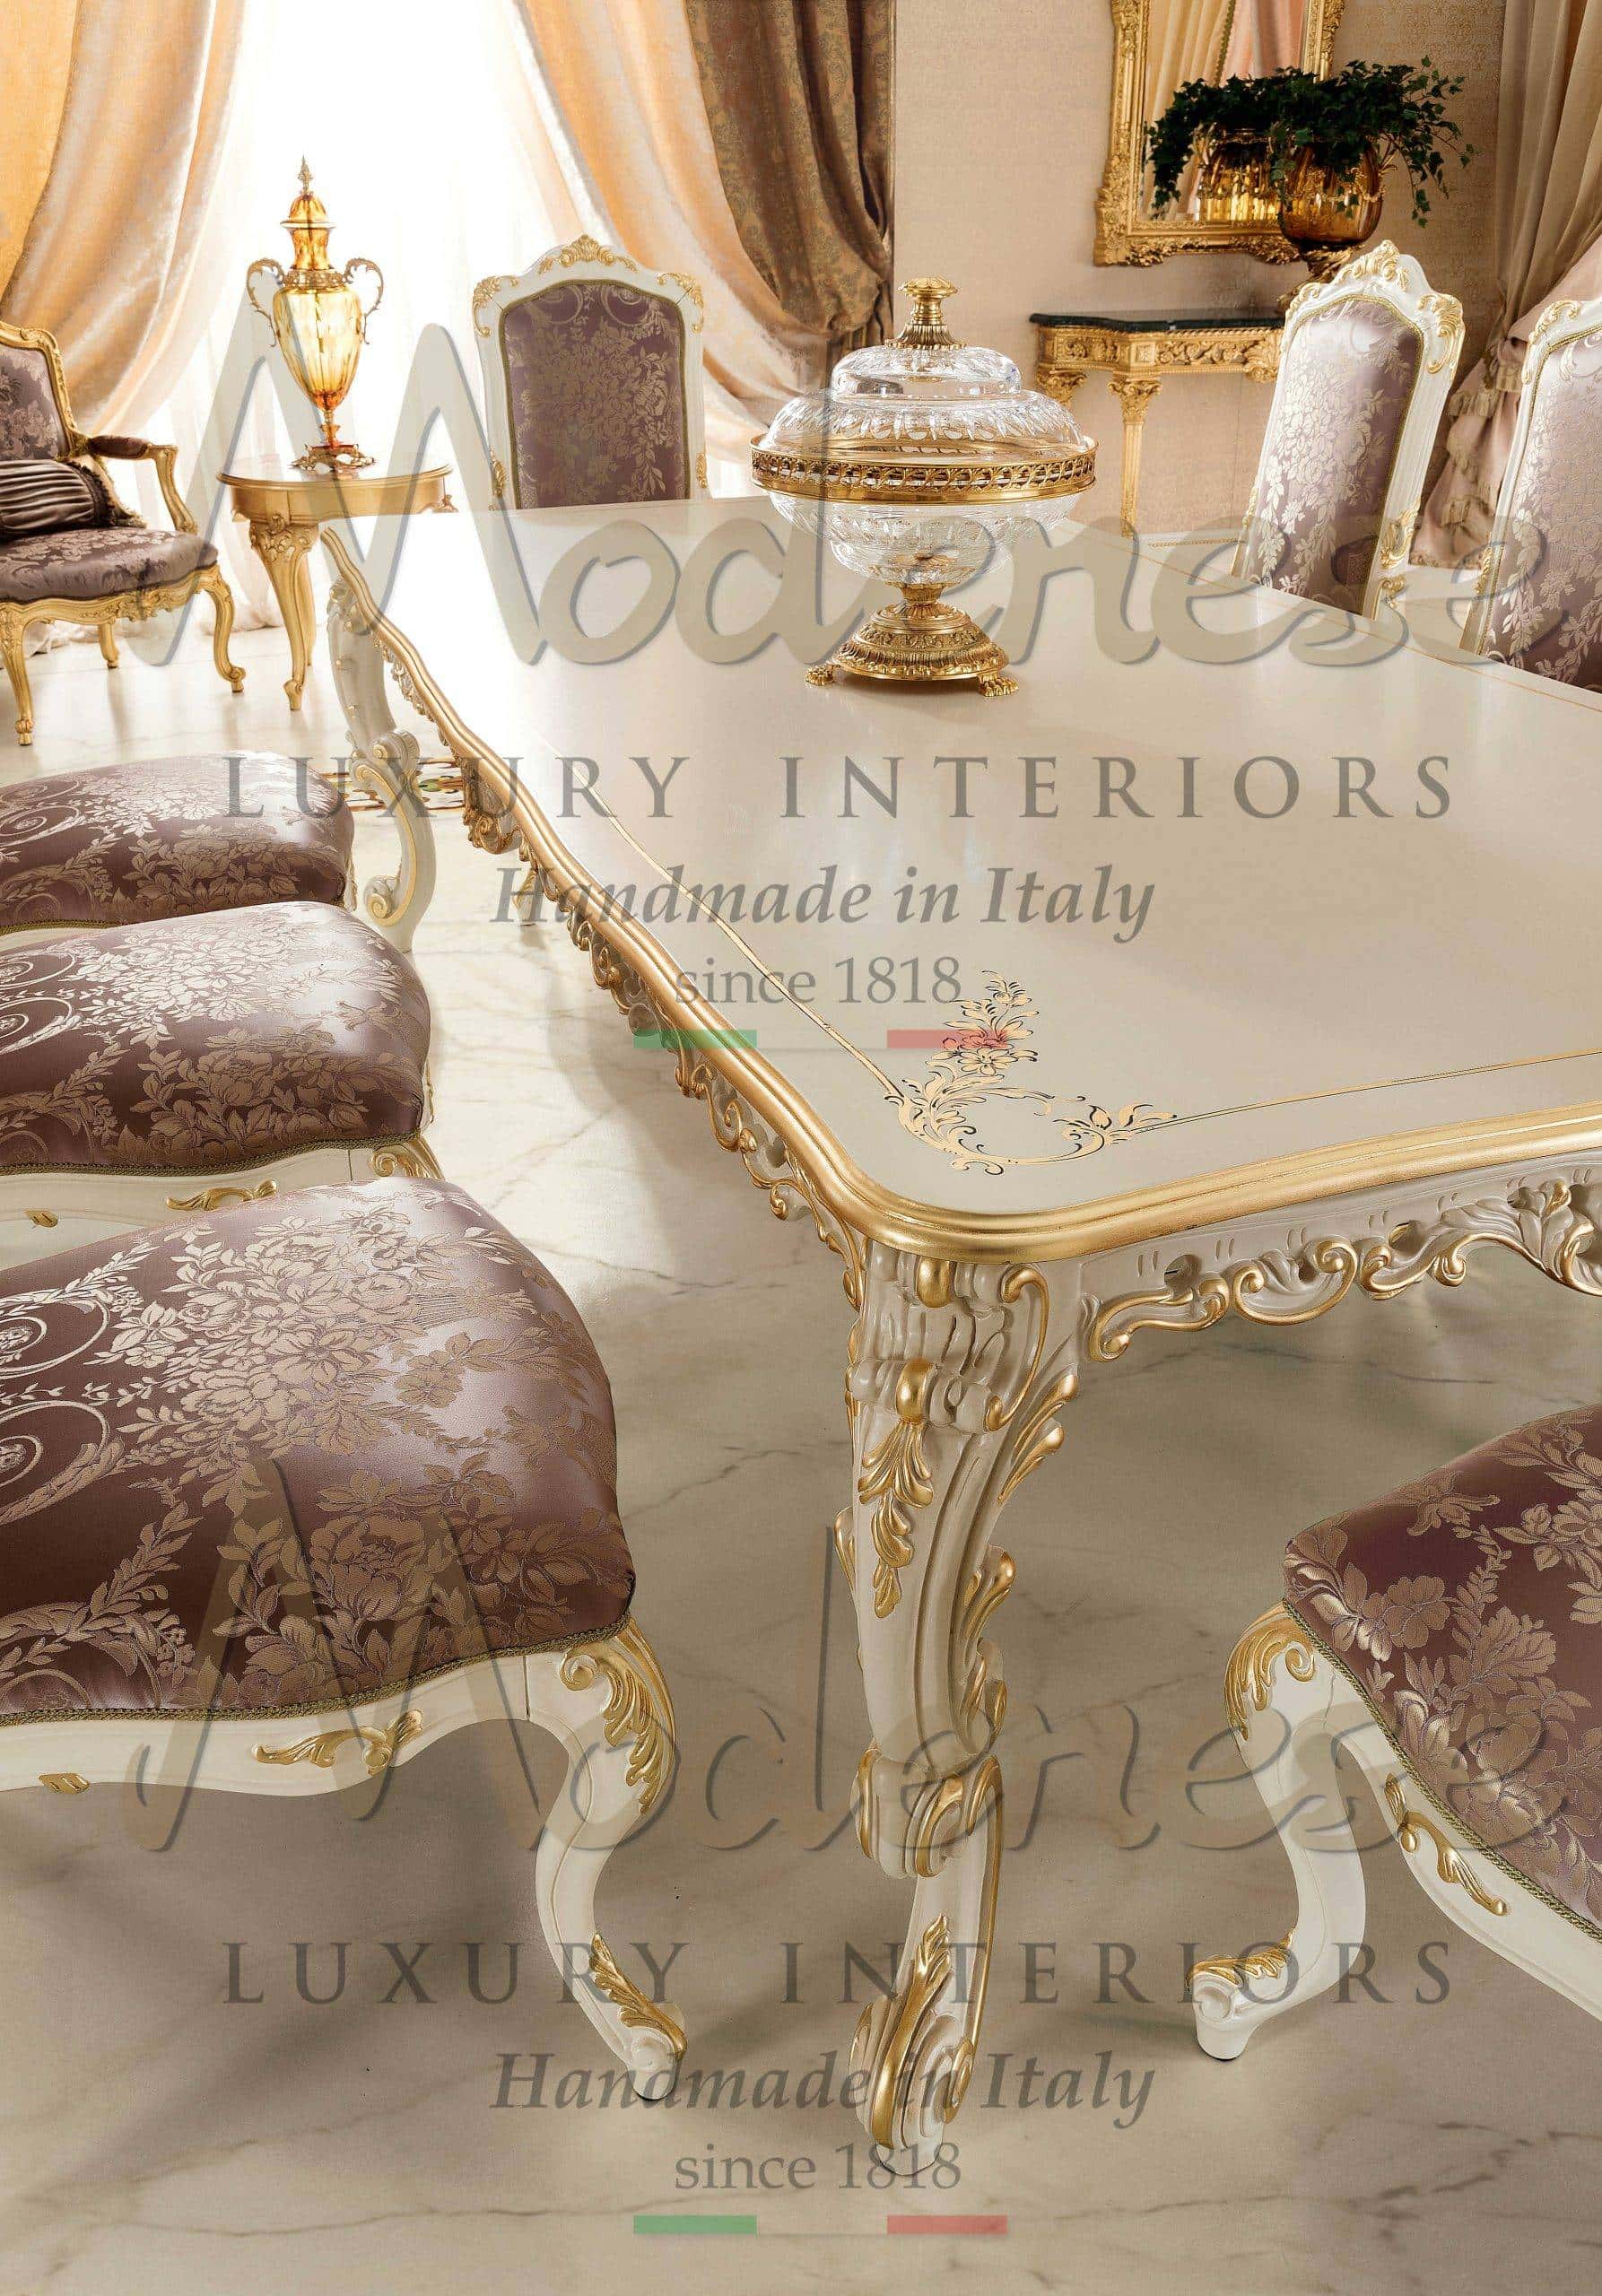 classic italian dining room furniture